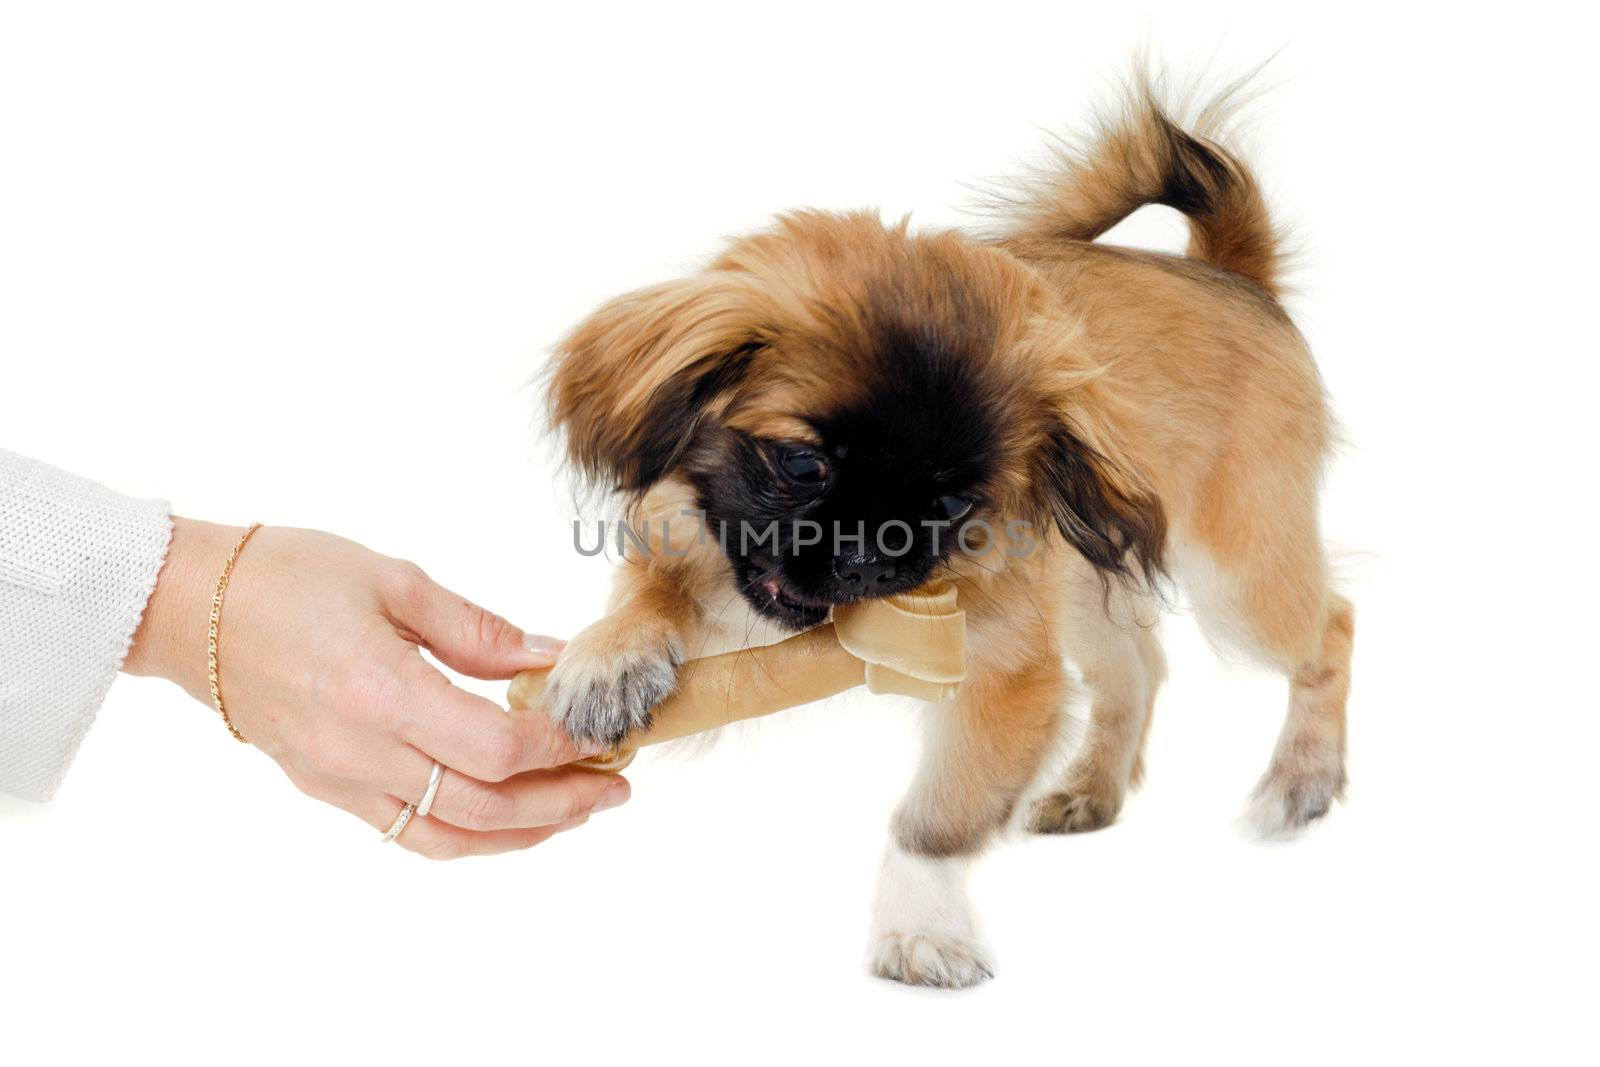 Puppy eating bone by cfoto